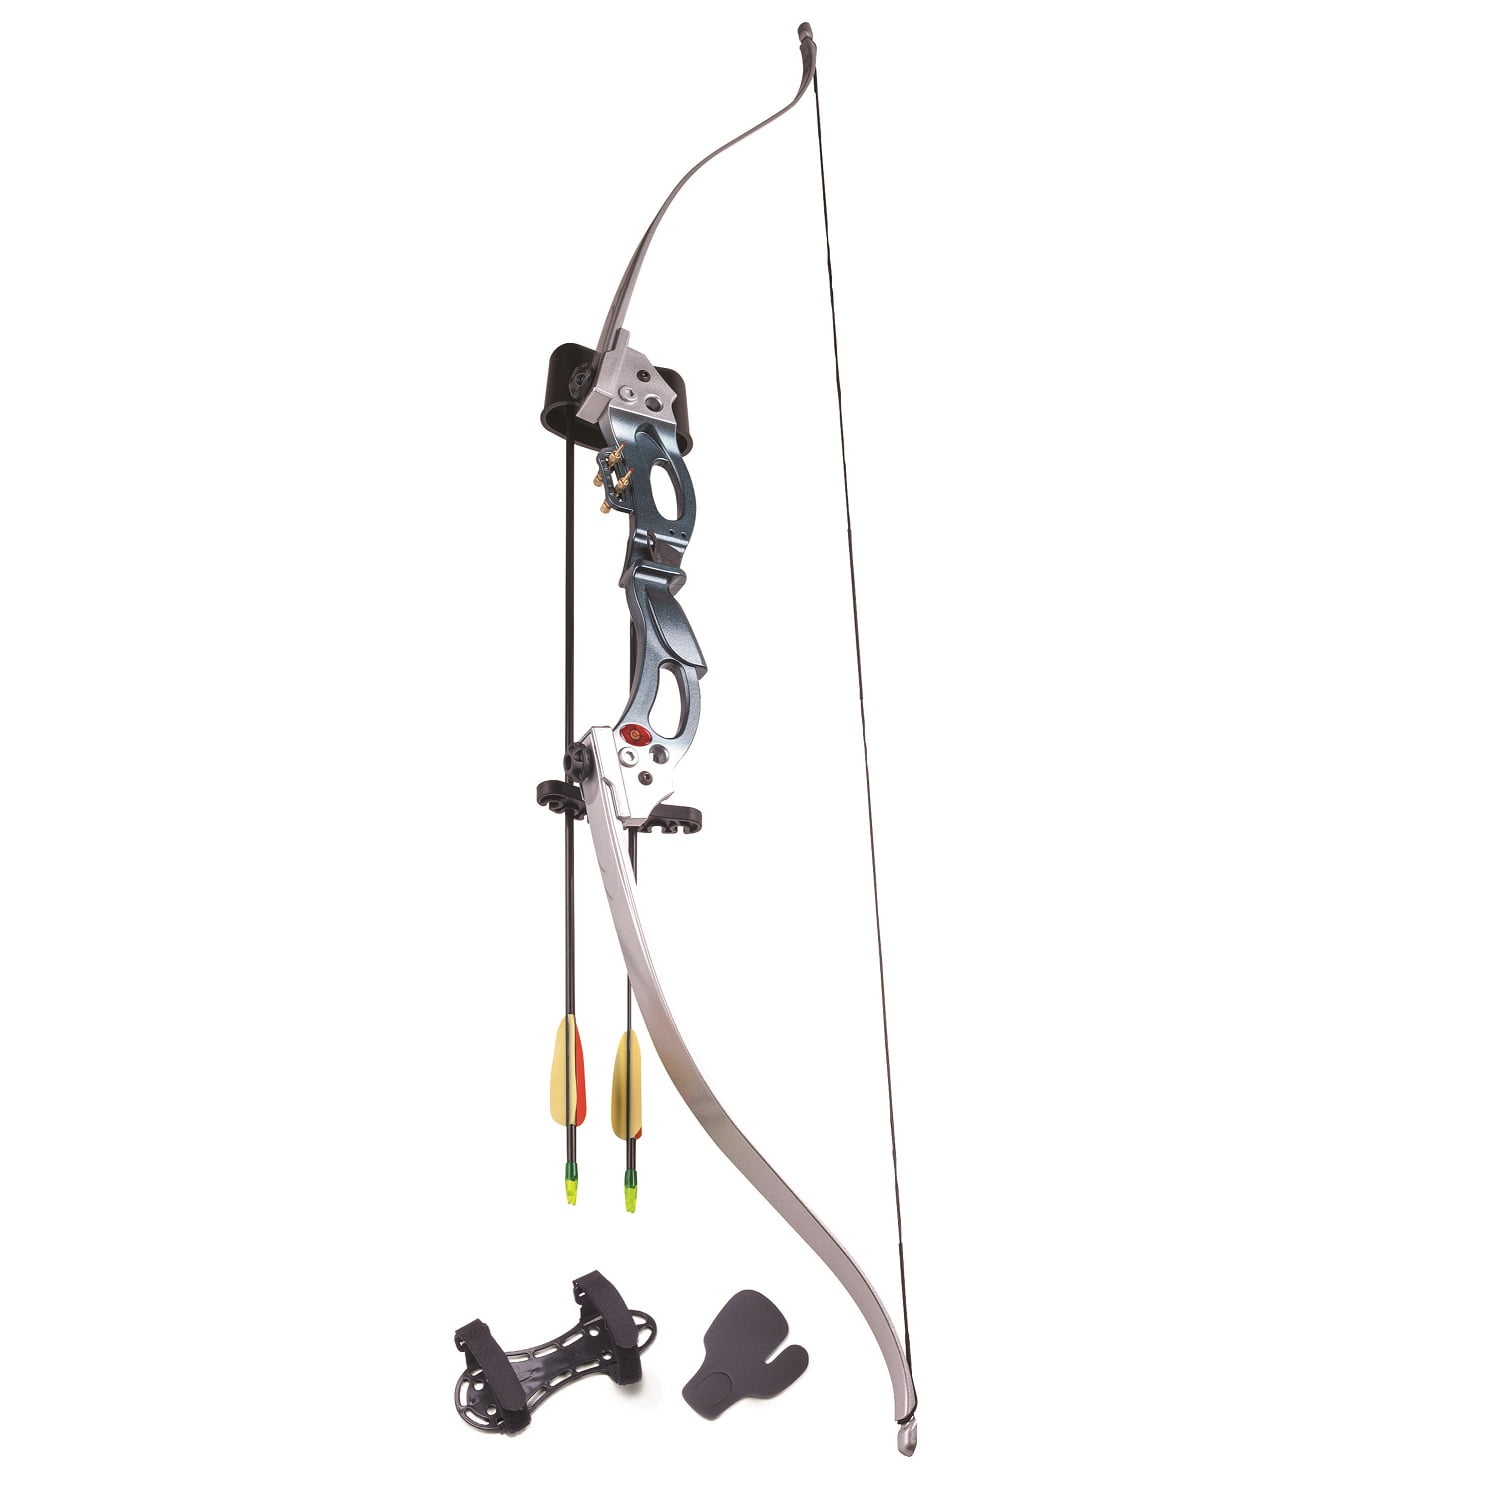 Details about   3-30PK Fibreglass Archery Arrows Practice with Steel Tip Compound/Recurve Bow